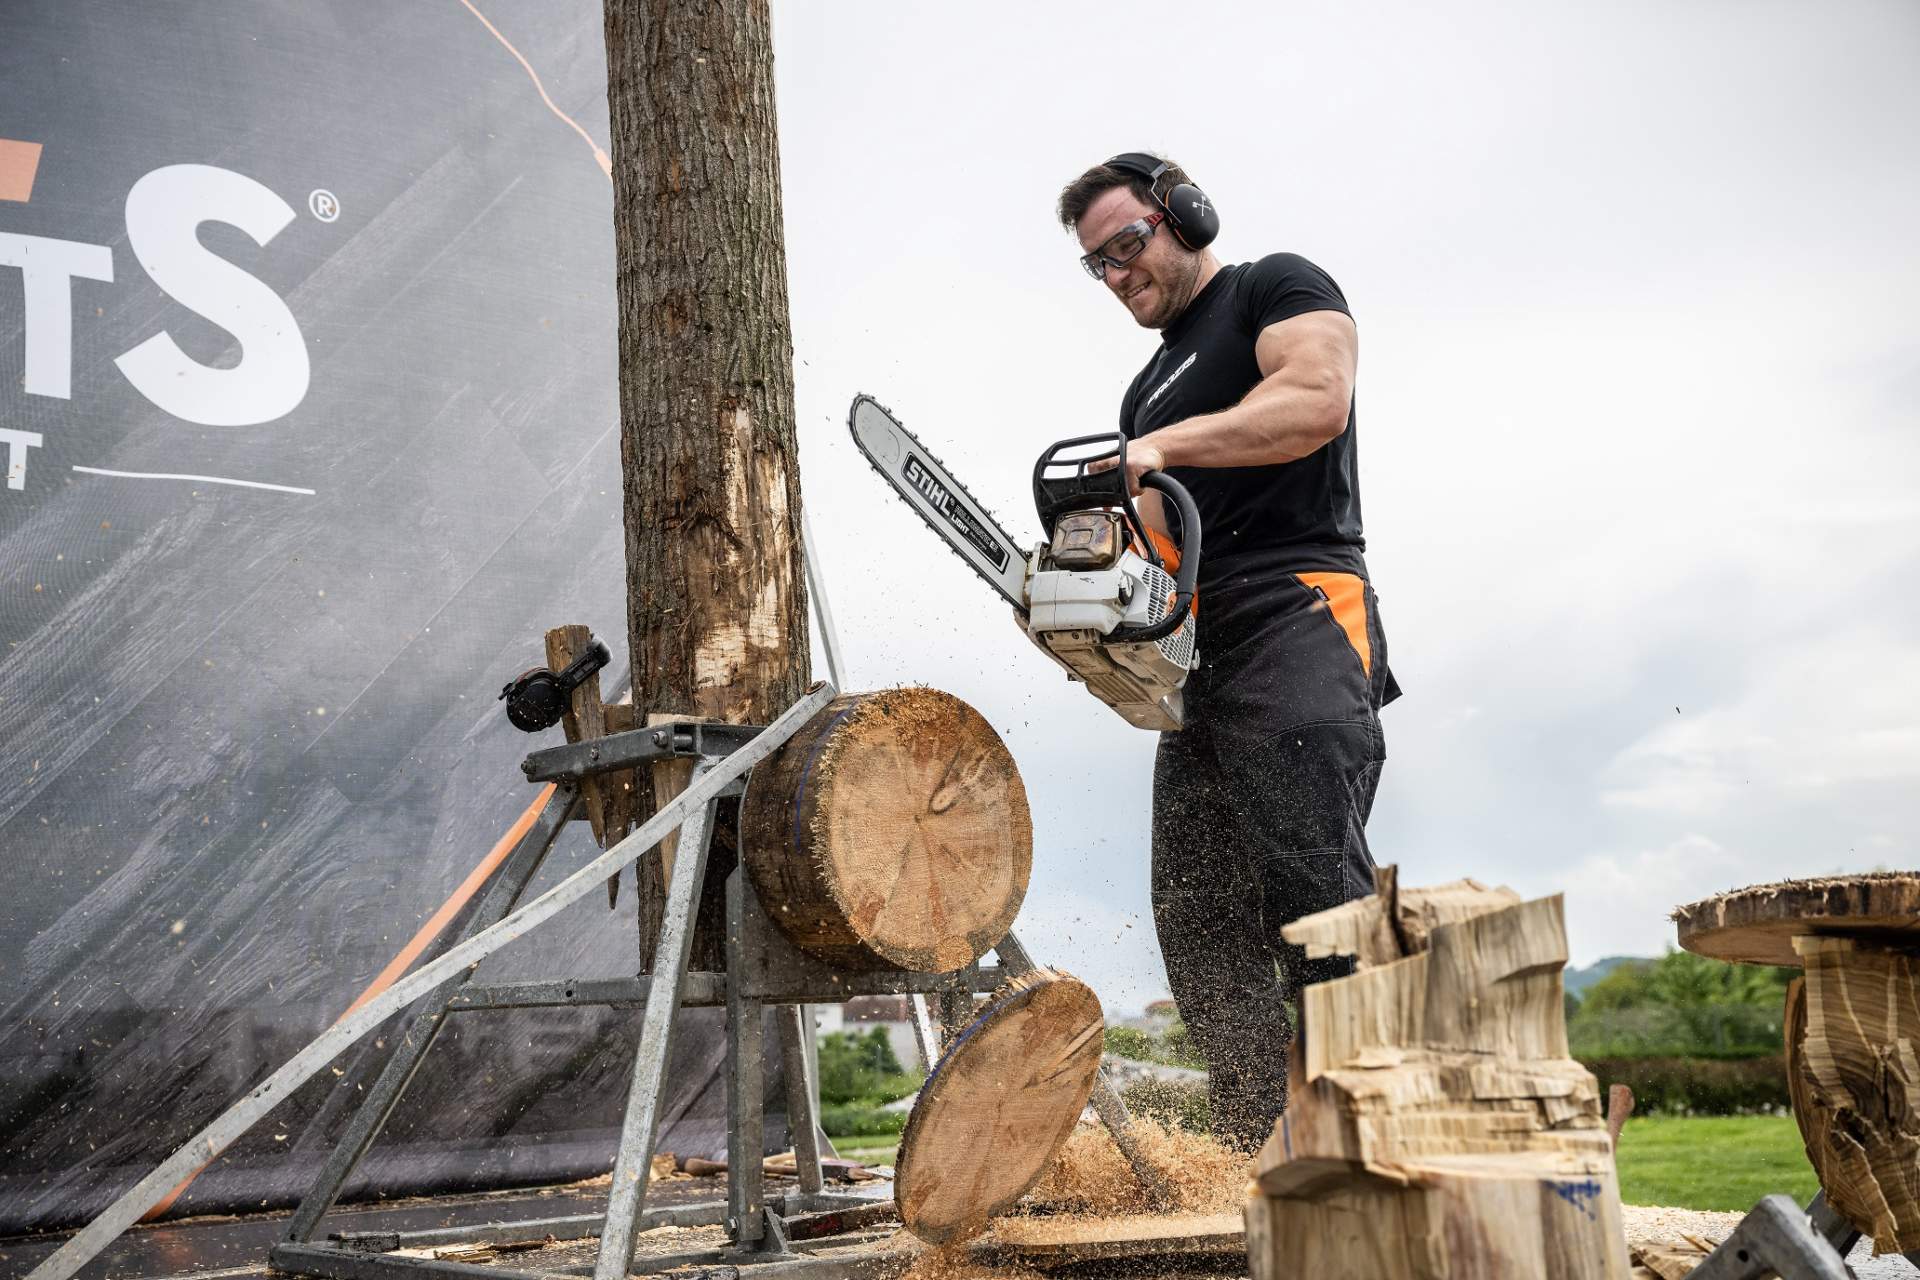 sascha huber timbersports challenge